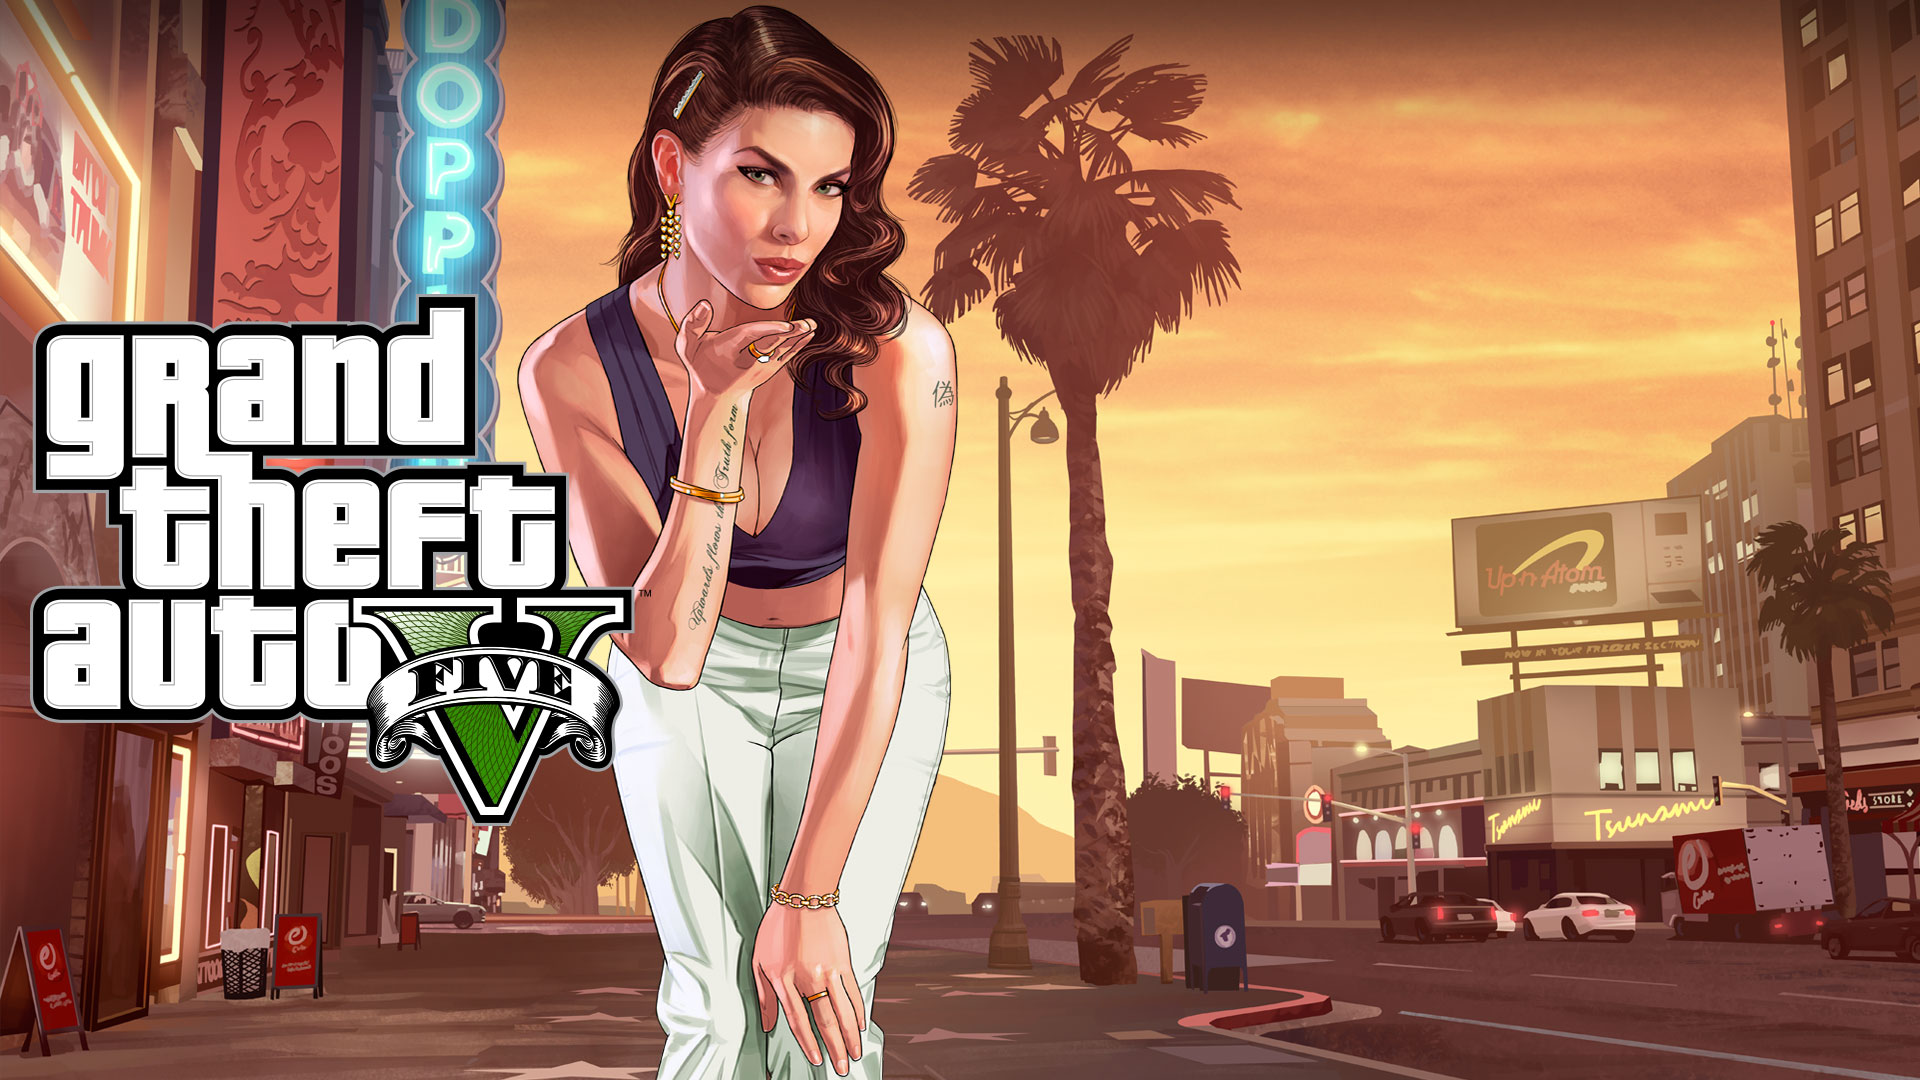 Grand Theft Auto V, 로스 산토스의 일몰 속에서 한 여성이 앞으로 몸을 기울여 손 키스를 날리는 모습. 